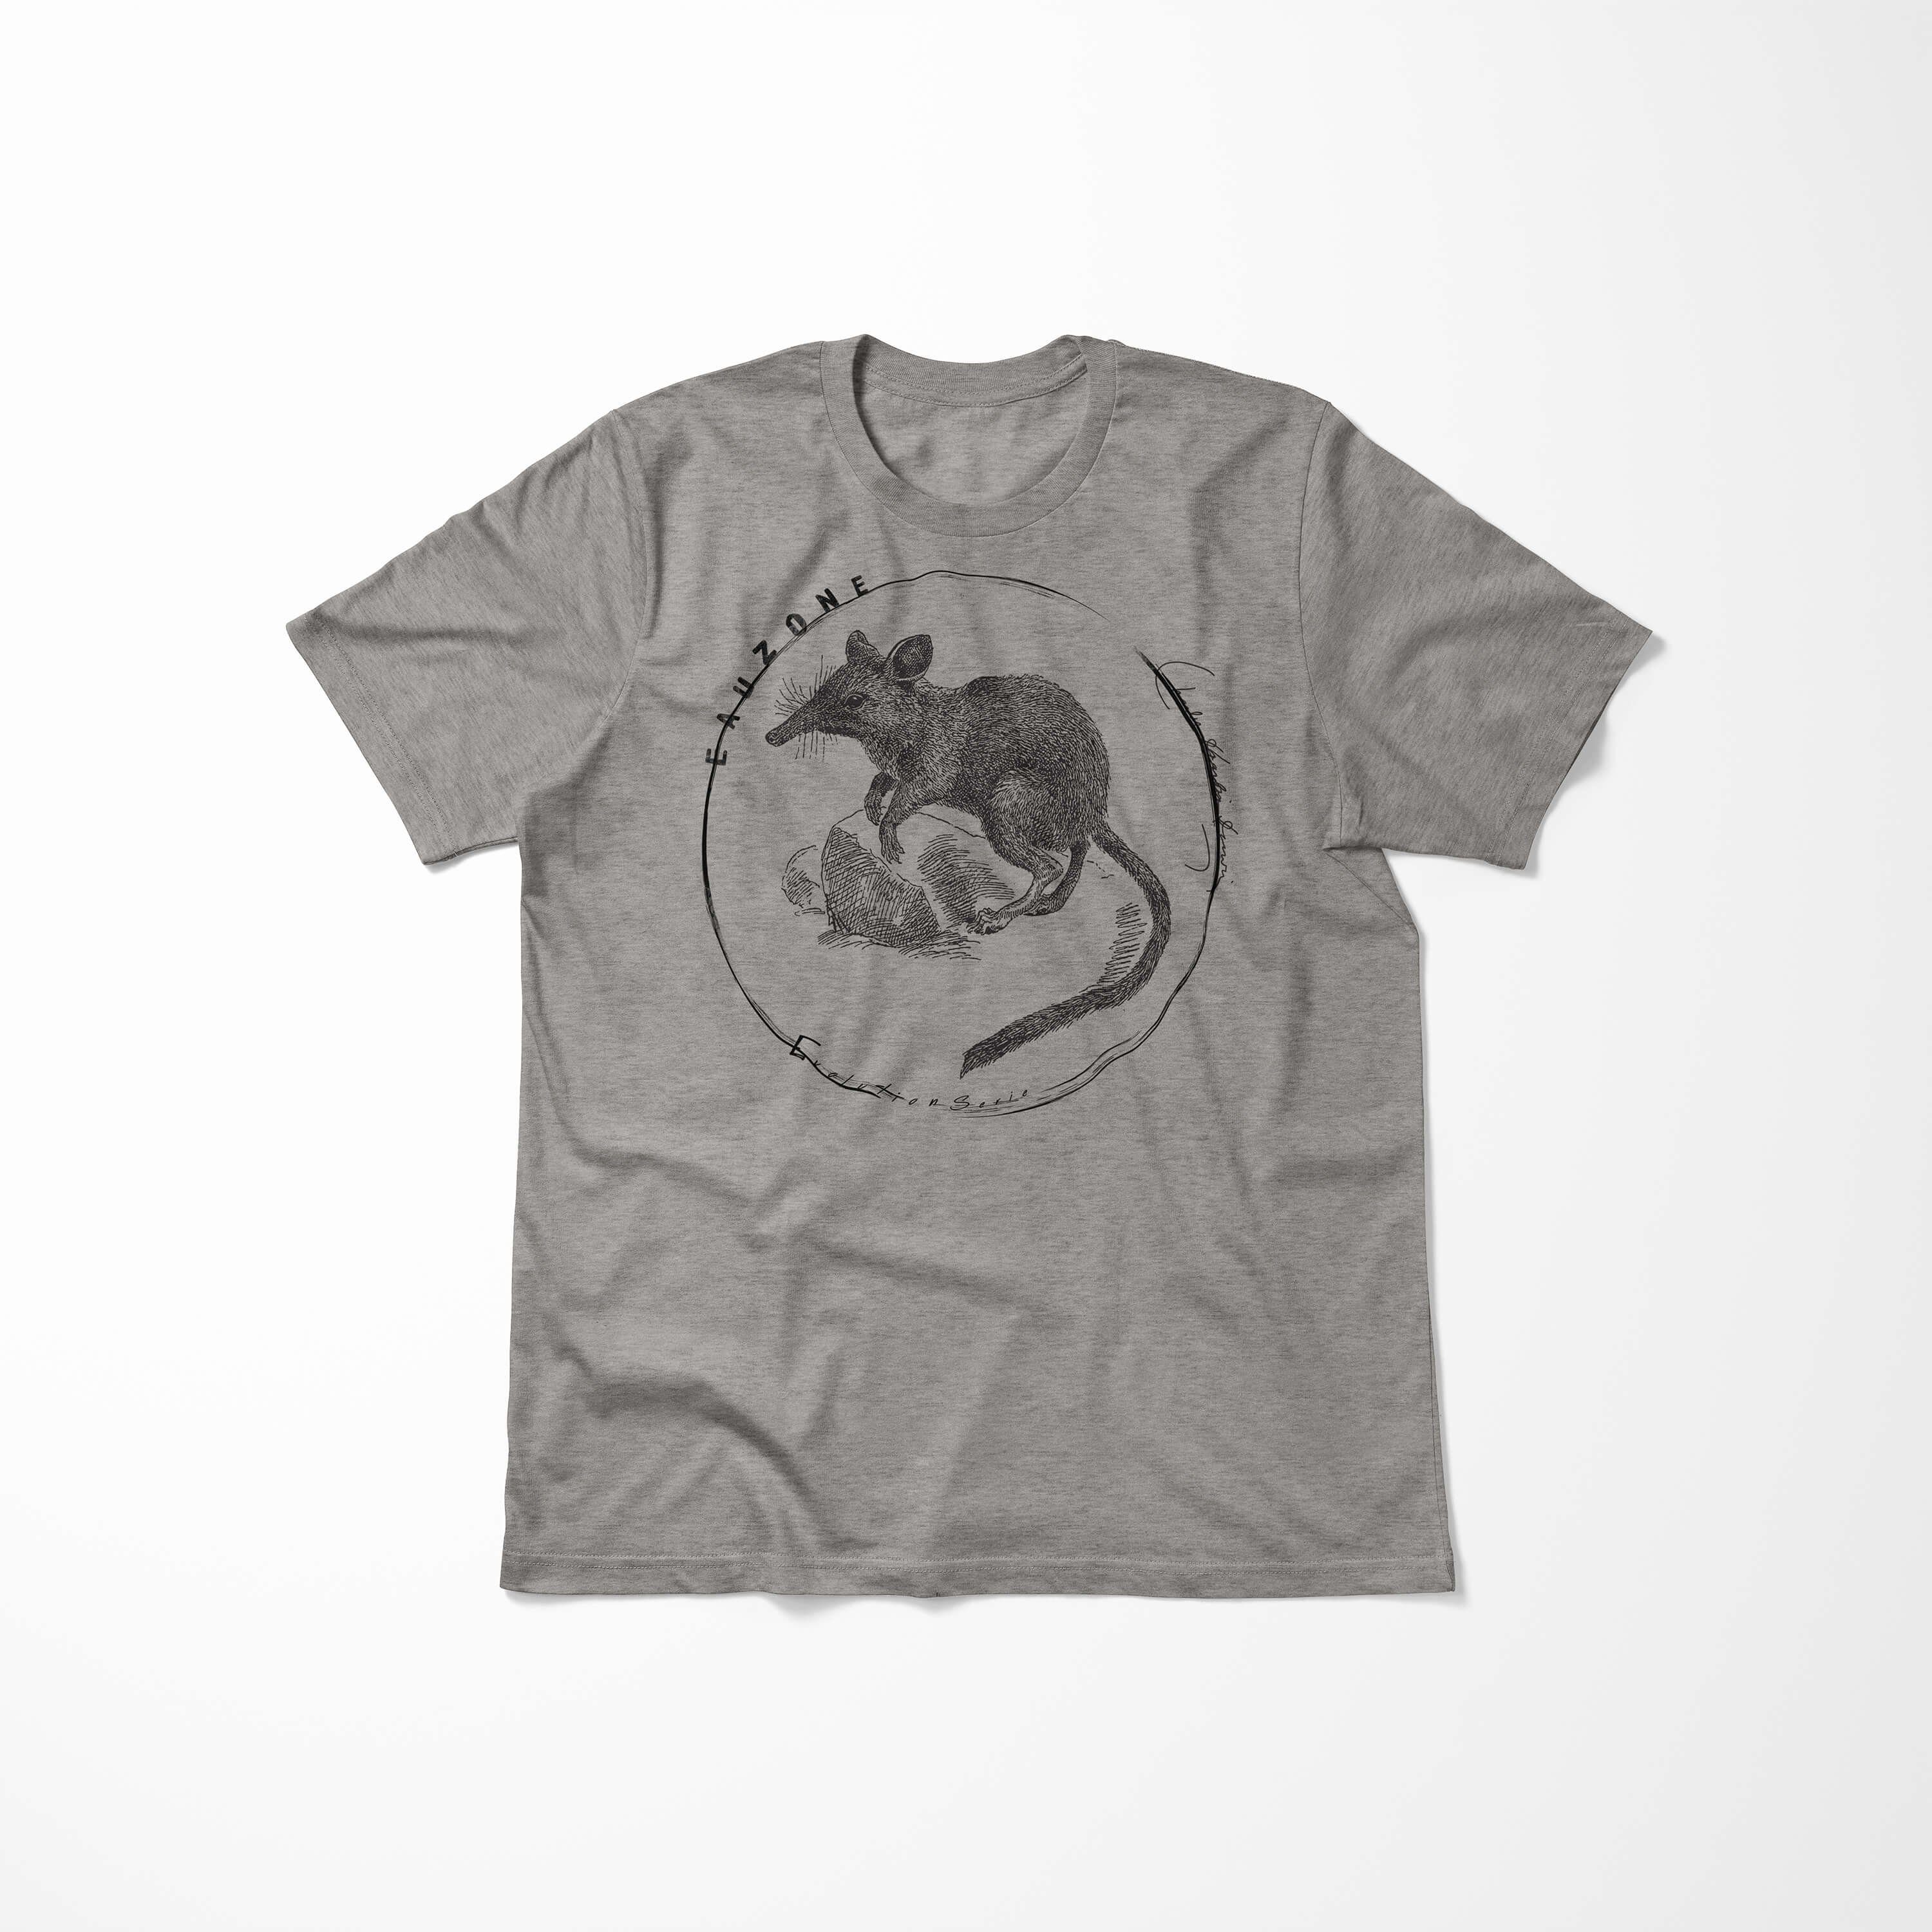 T-Shirt Evolution Ash Sinus Herren Springspitzmaus T-Shirt Art